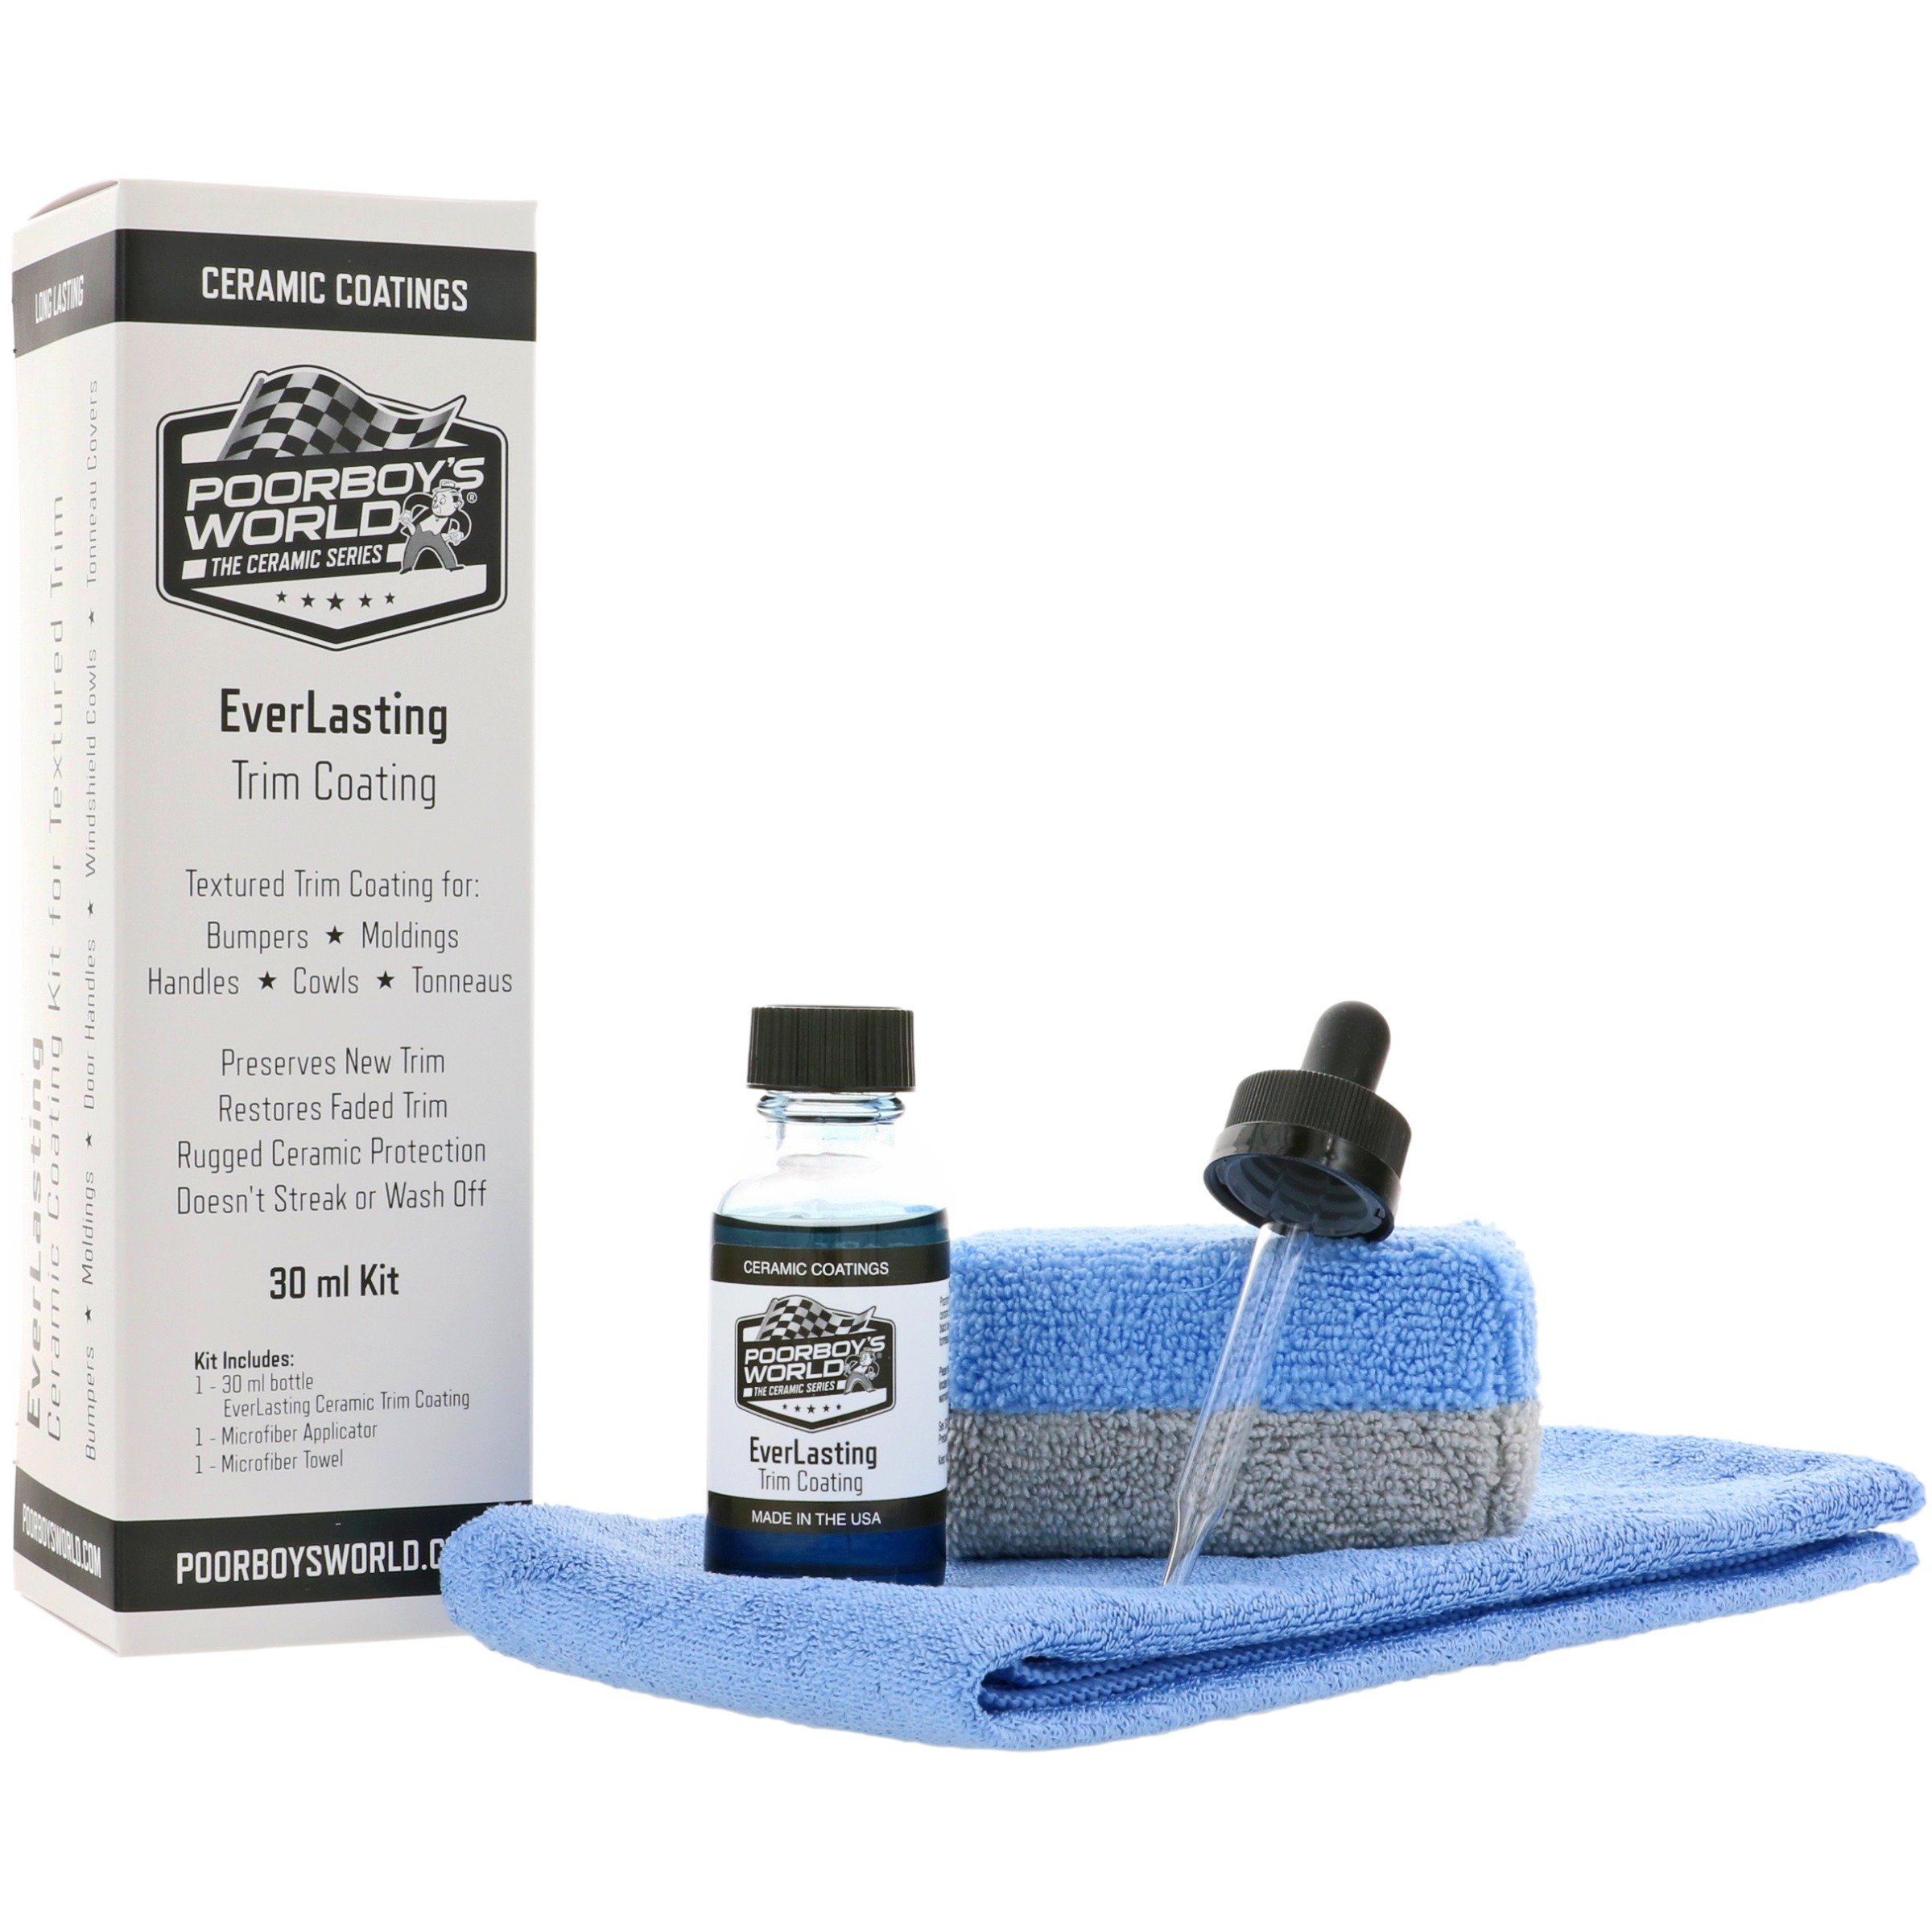 EverLasting Trim Coating 30 ml kit